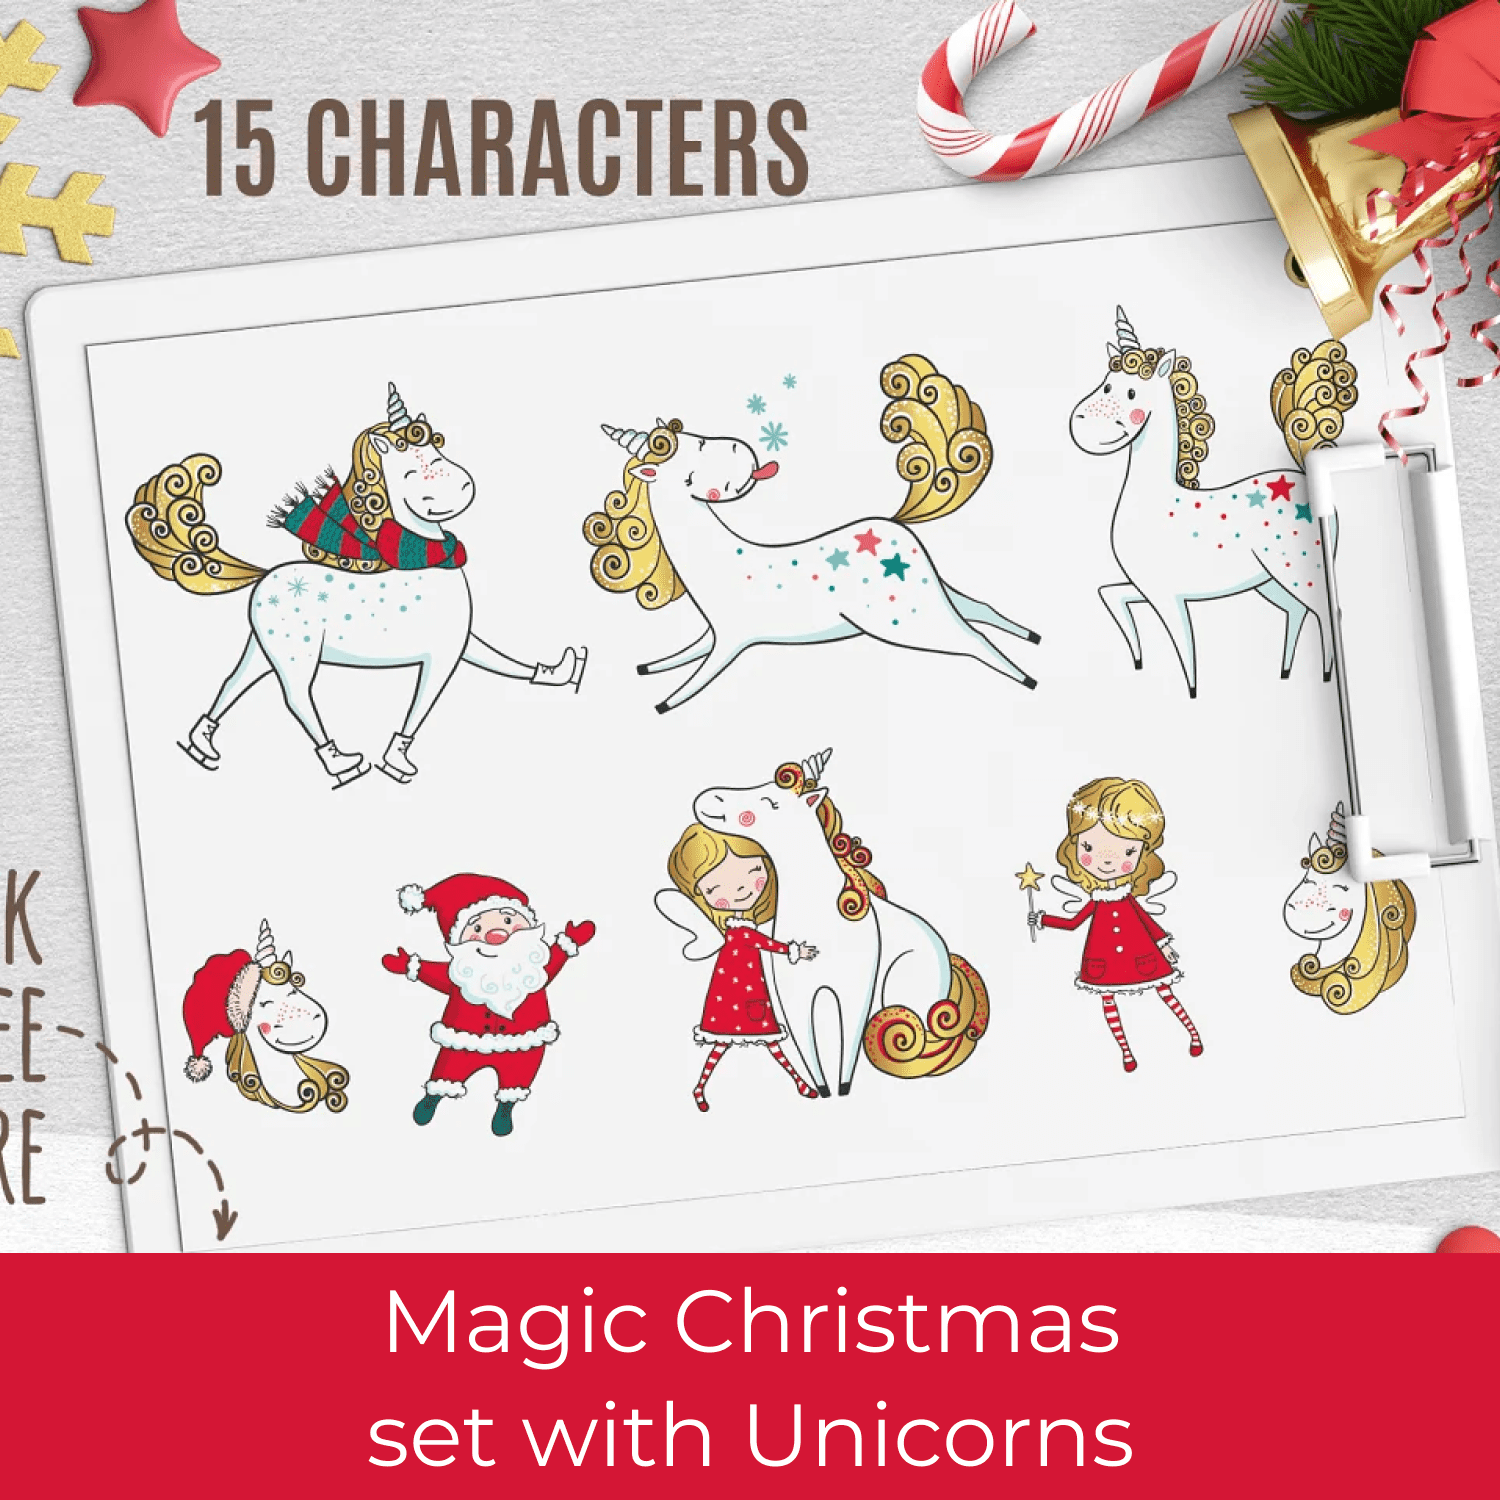 Magic Christmas set with Unicorns cover.